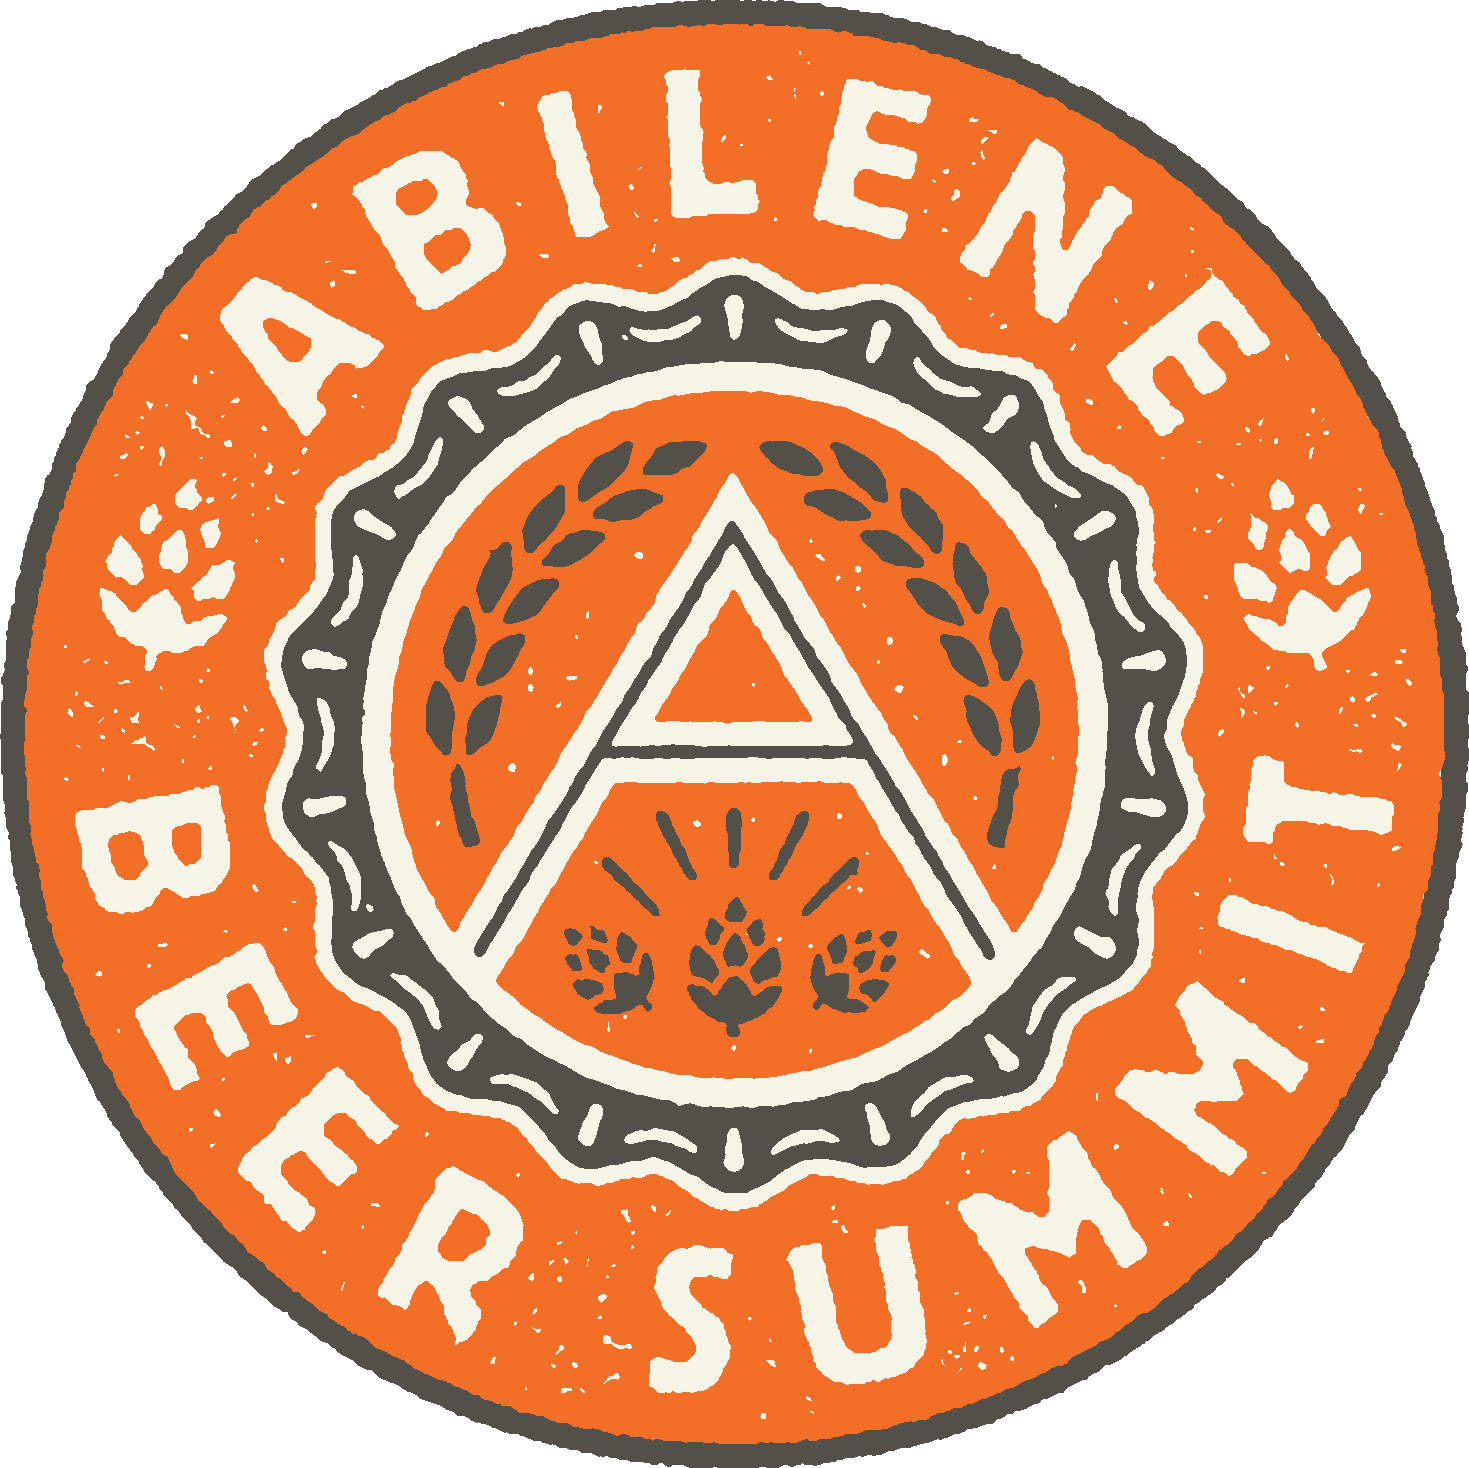 Abilene Beer Summit